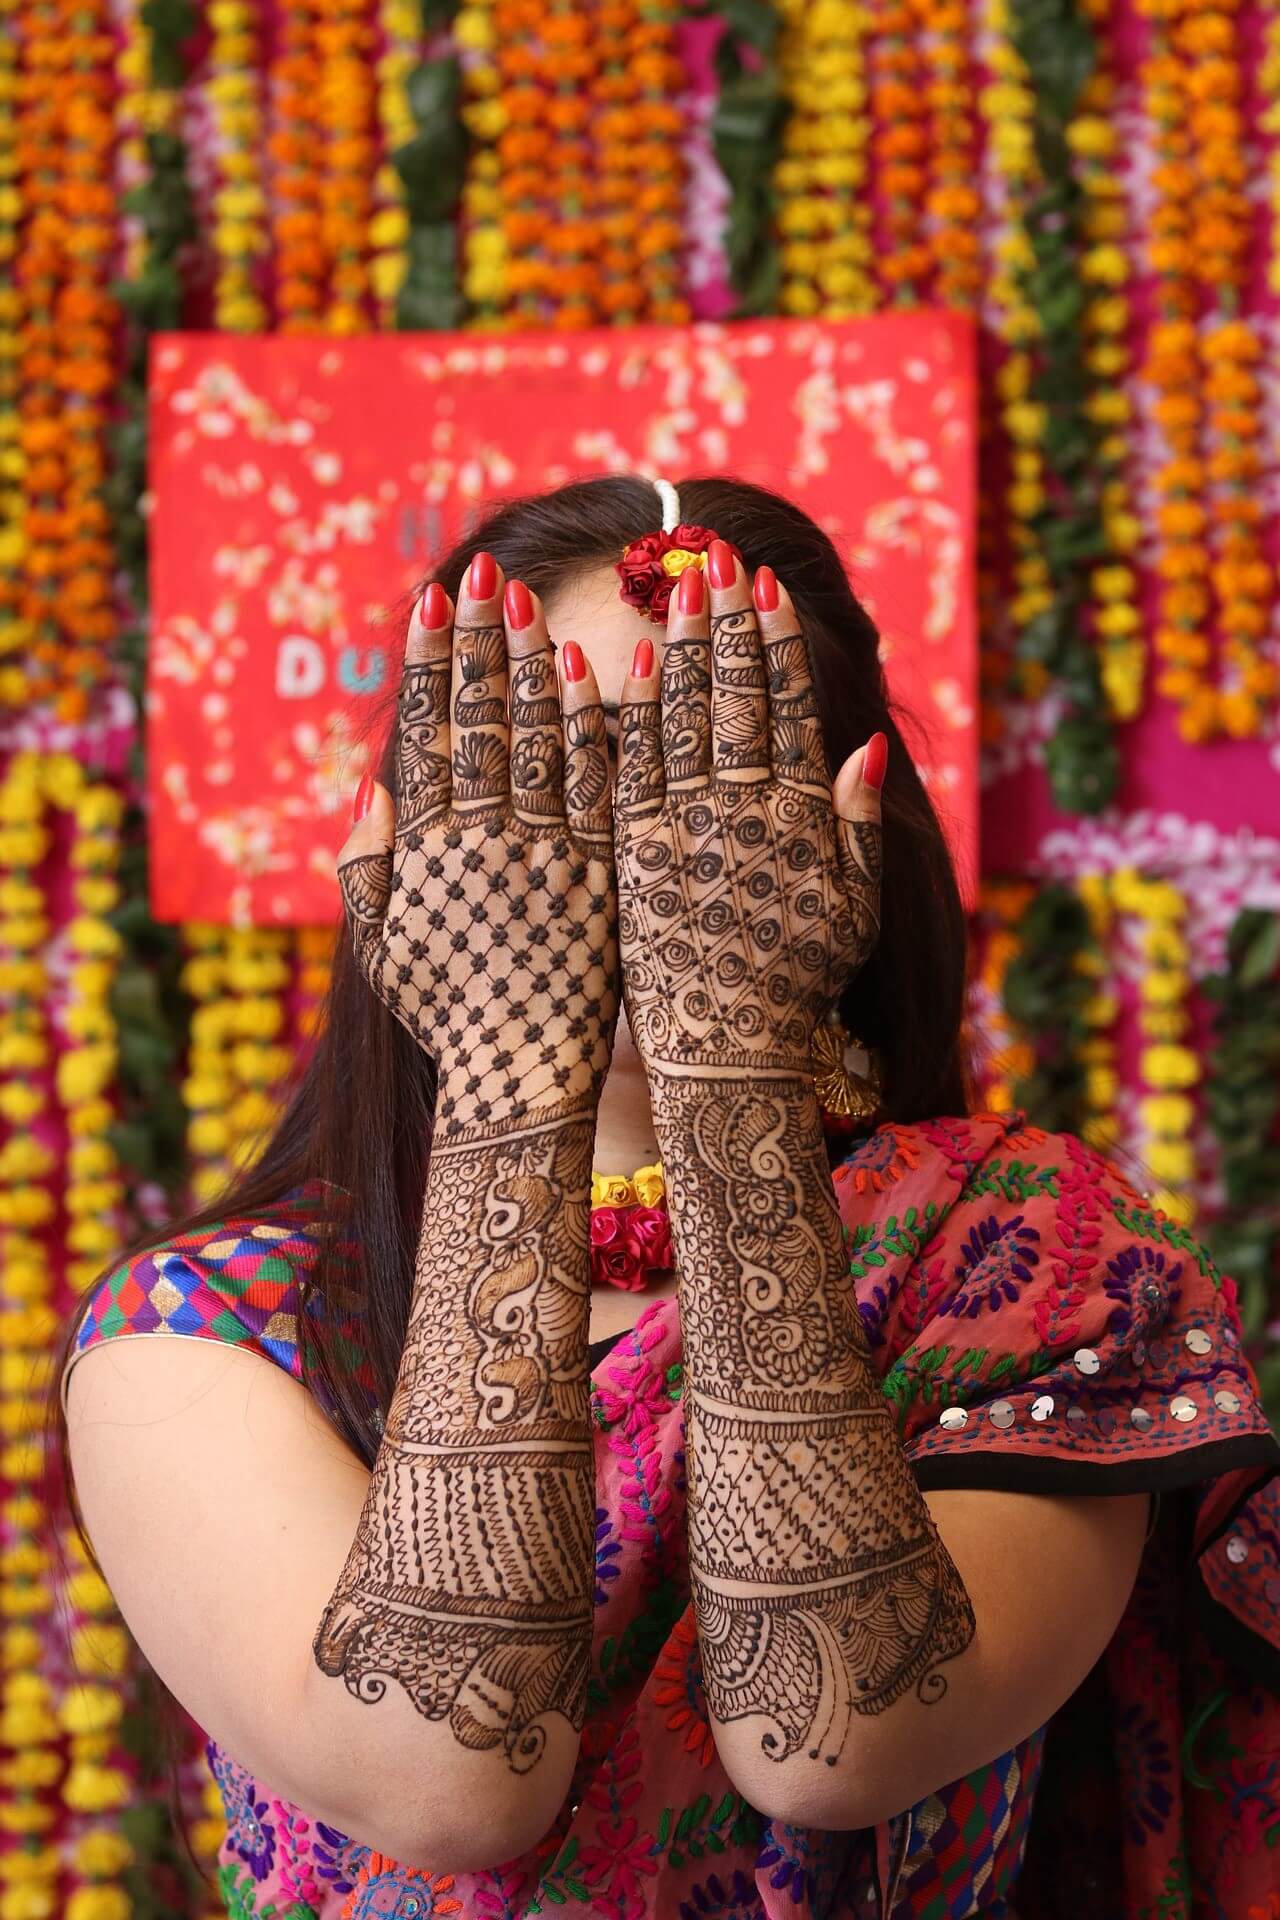 Woman displaying intricate henna designs